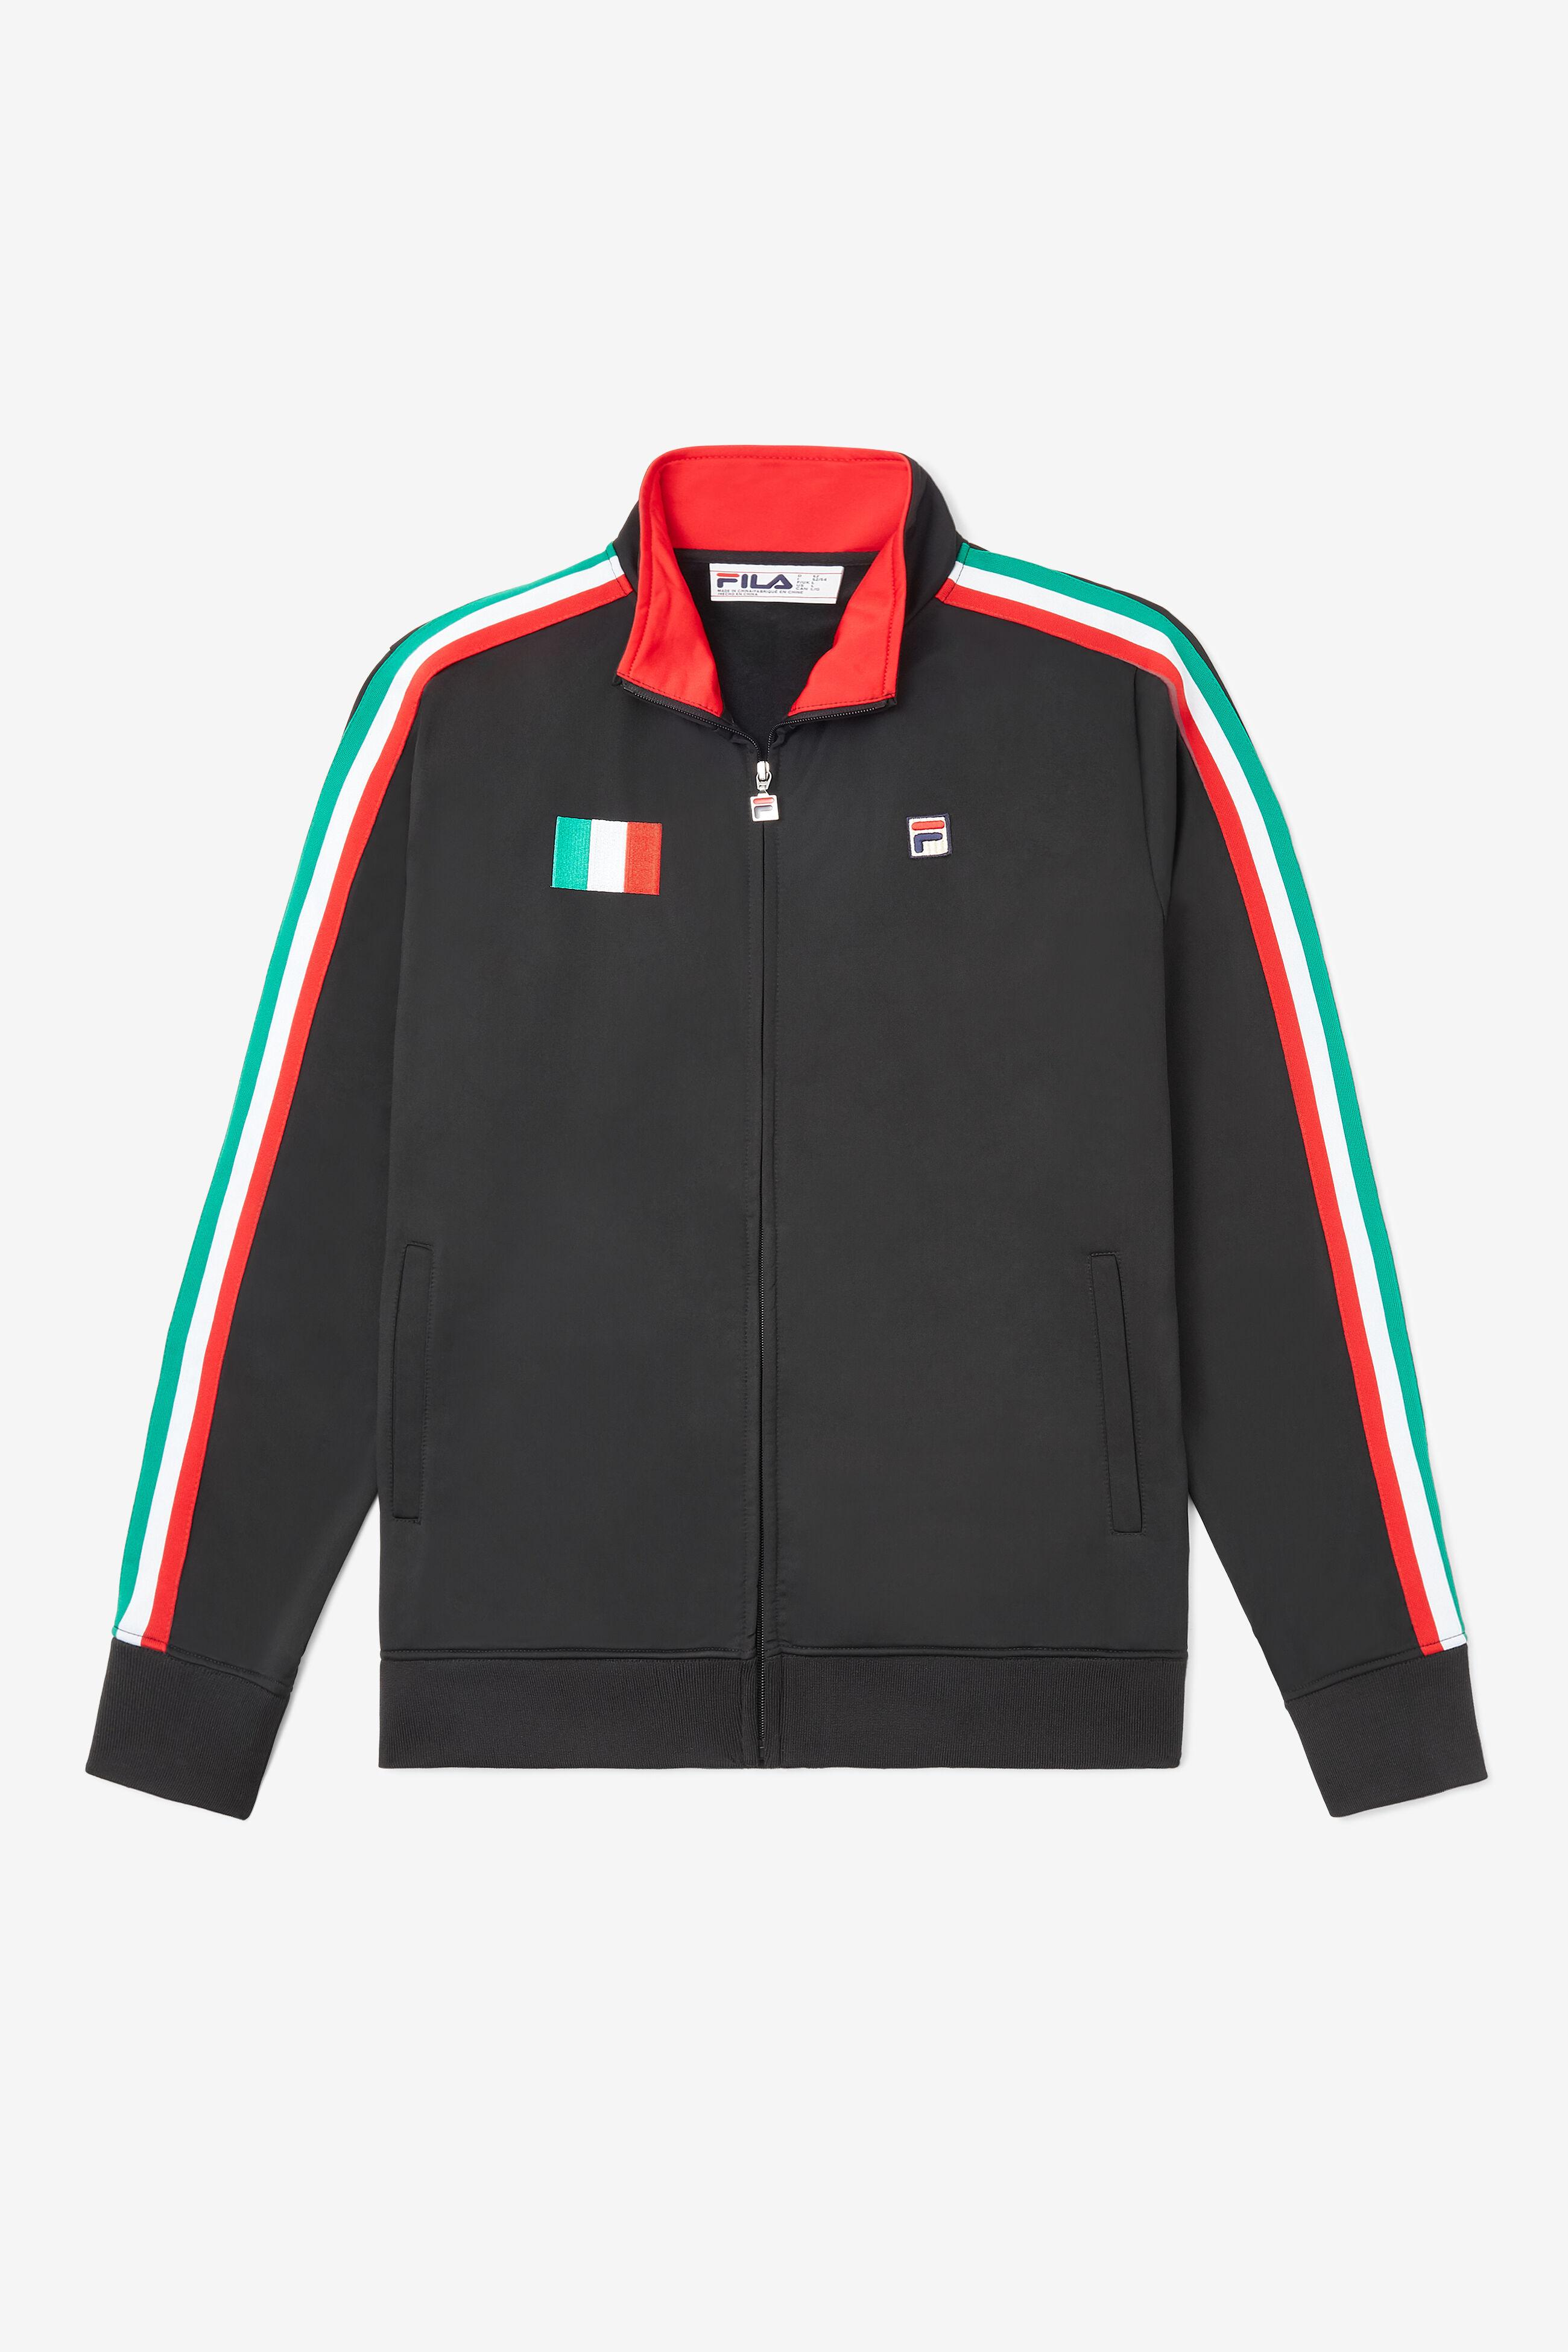 Fila Italy Track Jacket in Black | Lyst